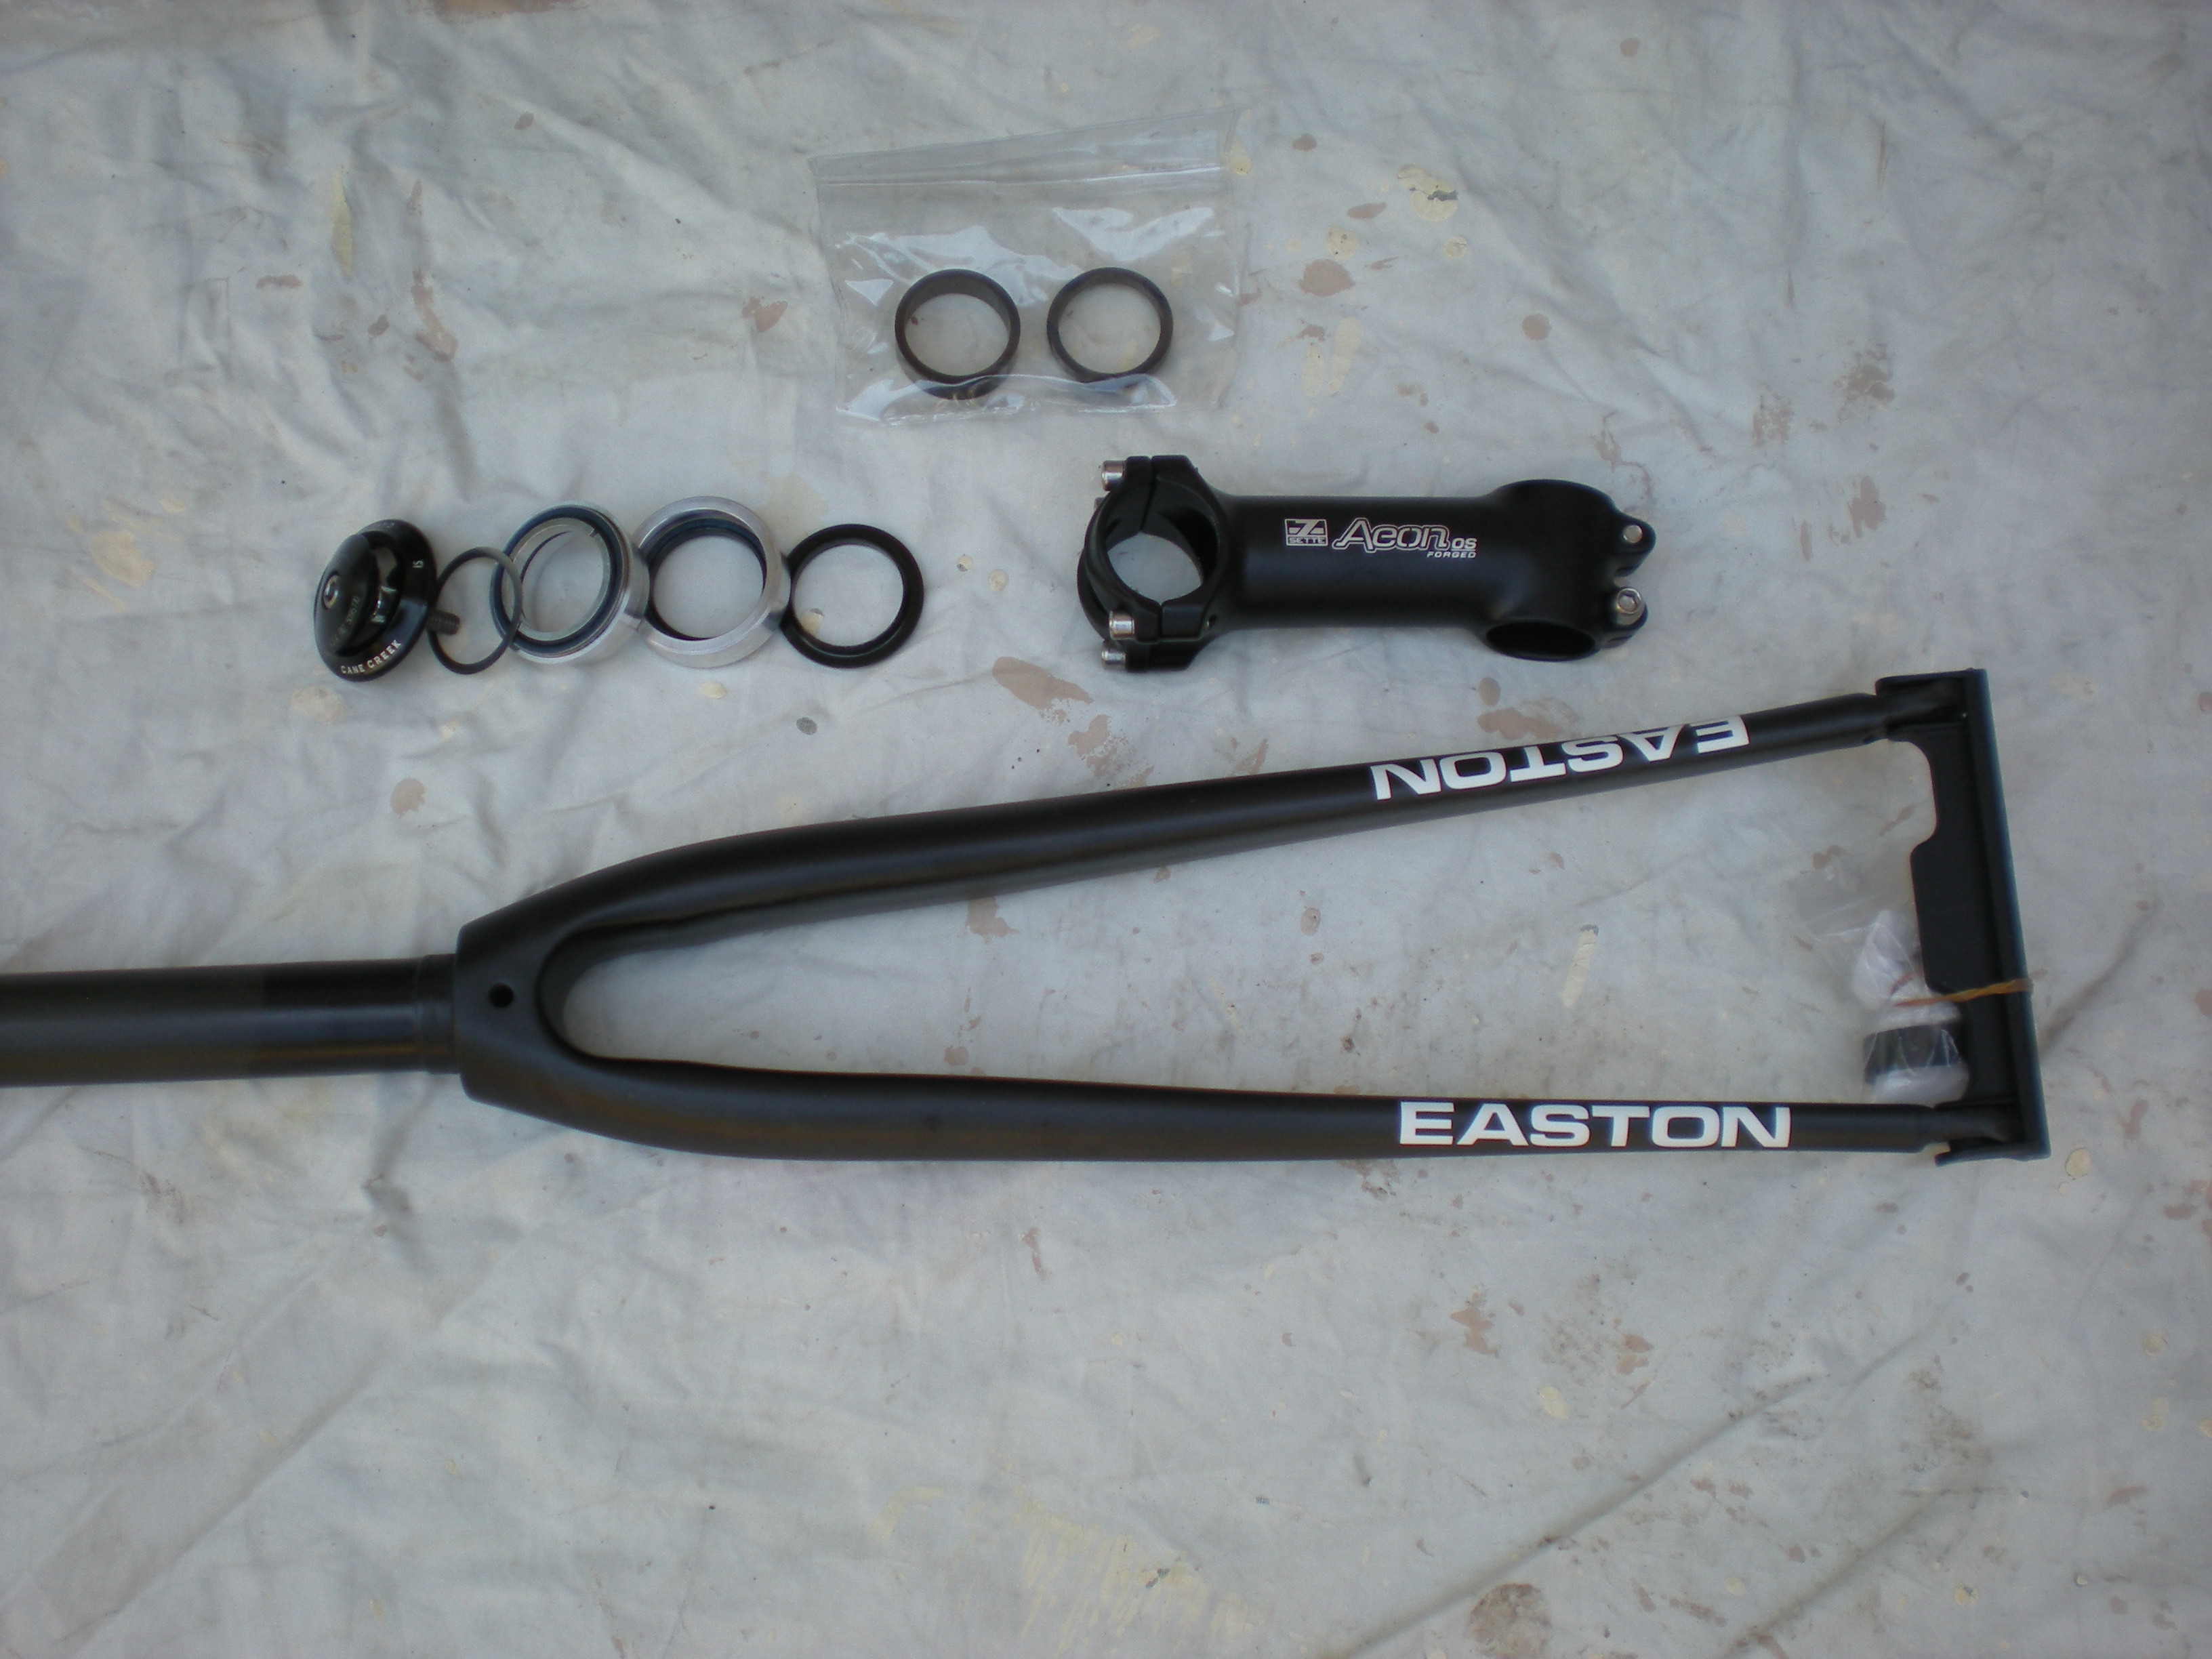 Easton fork and stem. Custom conversion kit from David Giessel.